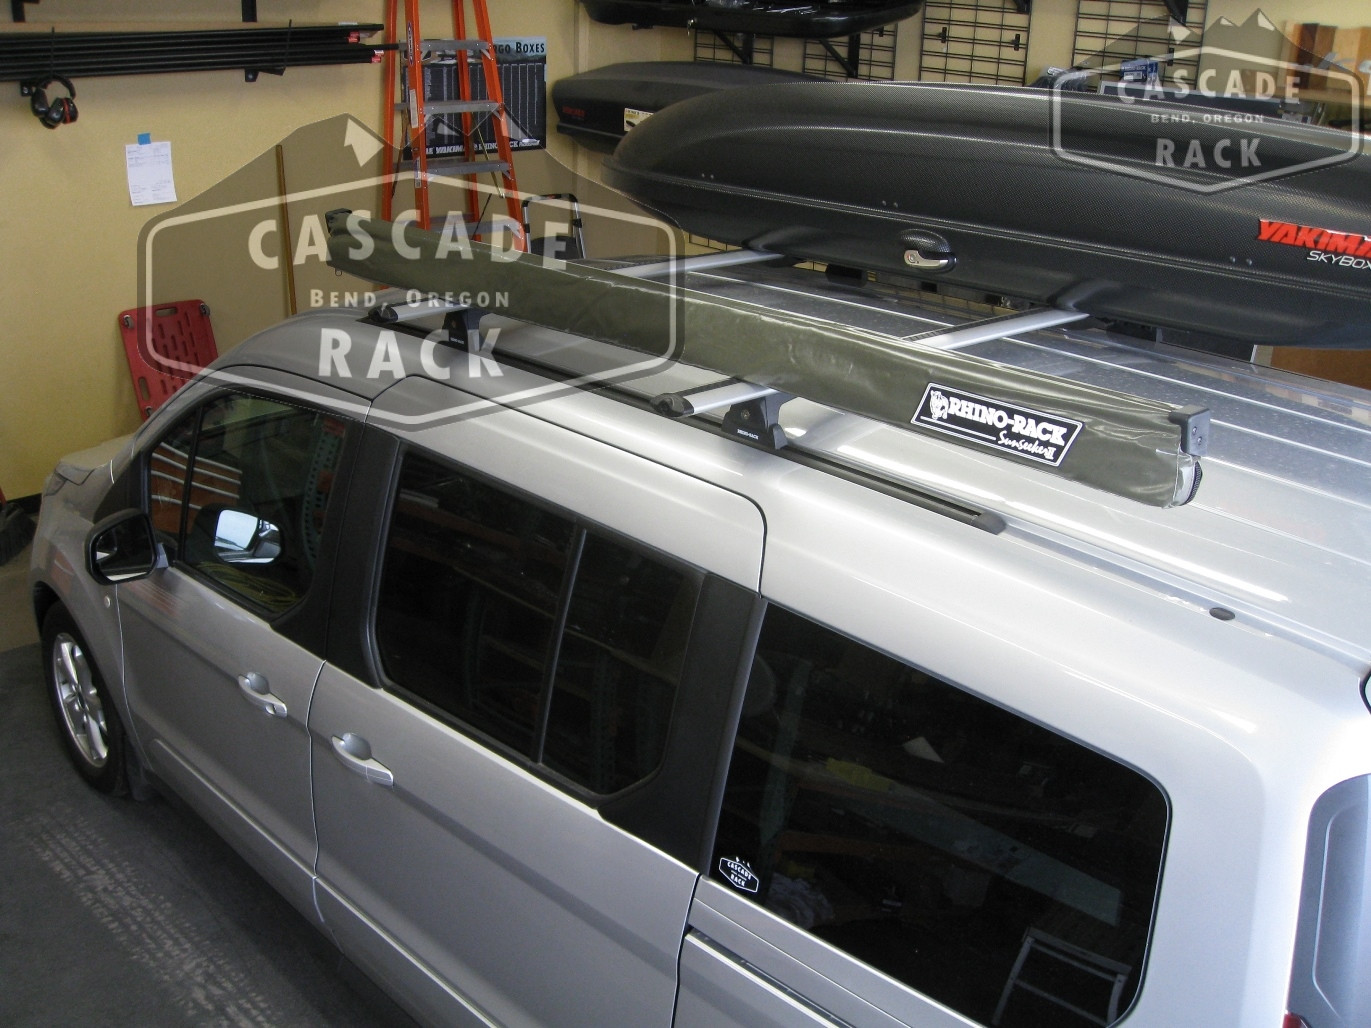 2015 Ford Transit Connect Wagon LWB - Custom Base Rack Installation / Cargo Box / Awning - Rhino Rack / Yakima